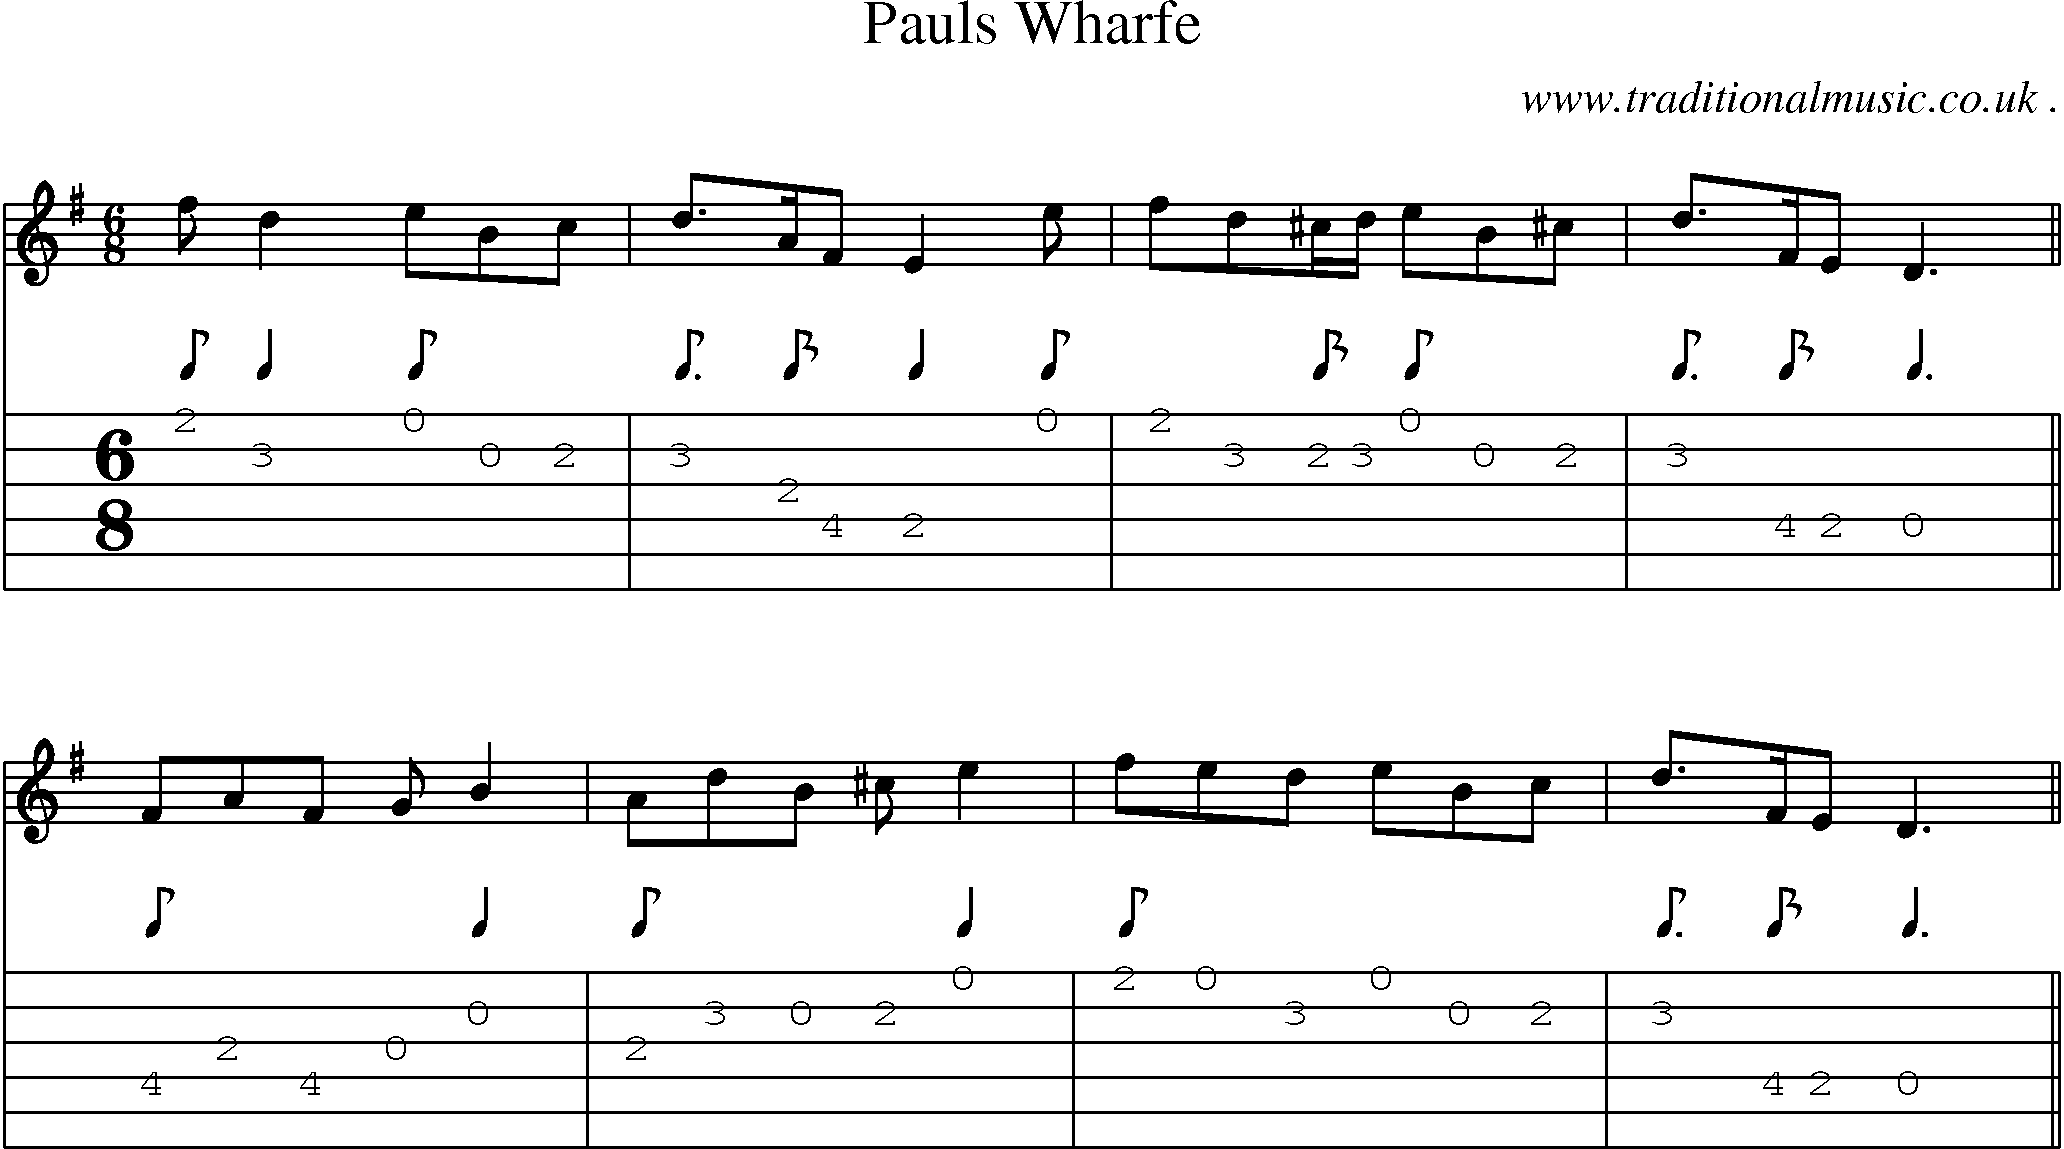 Sheet-Music and Guitar Tabs for Pauls Wharfe